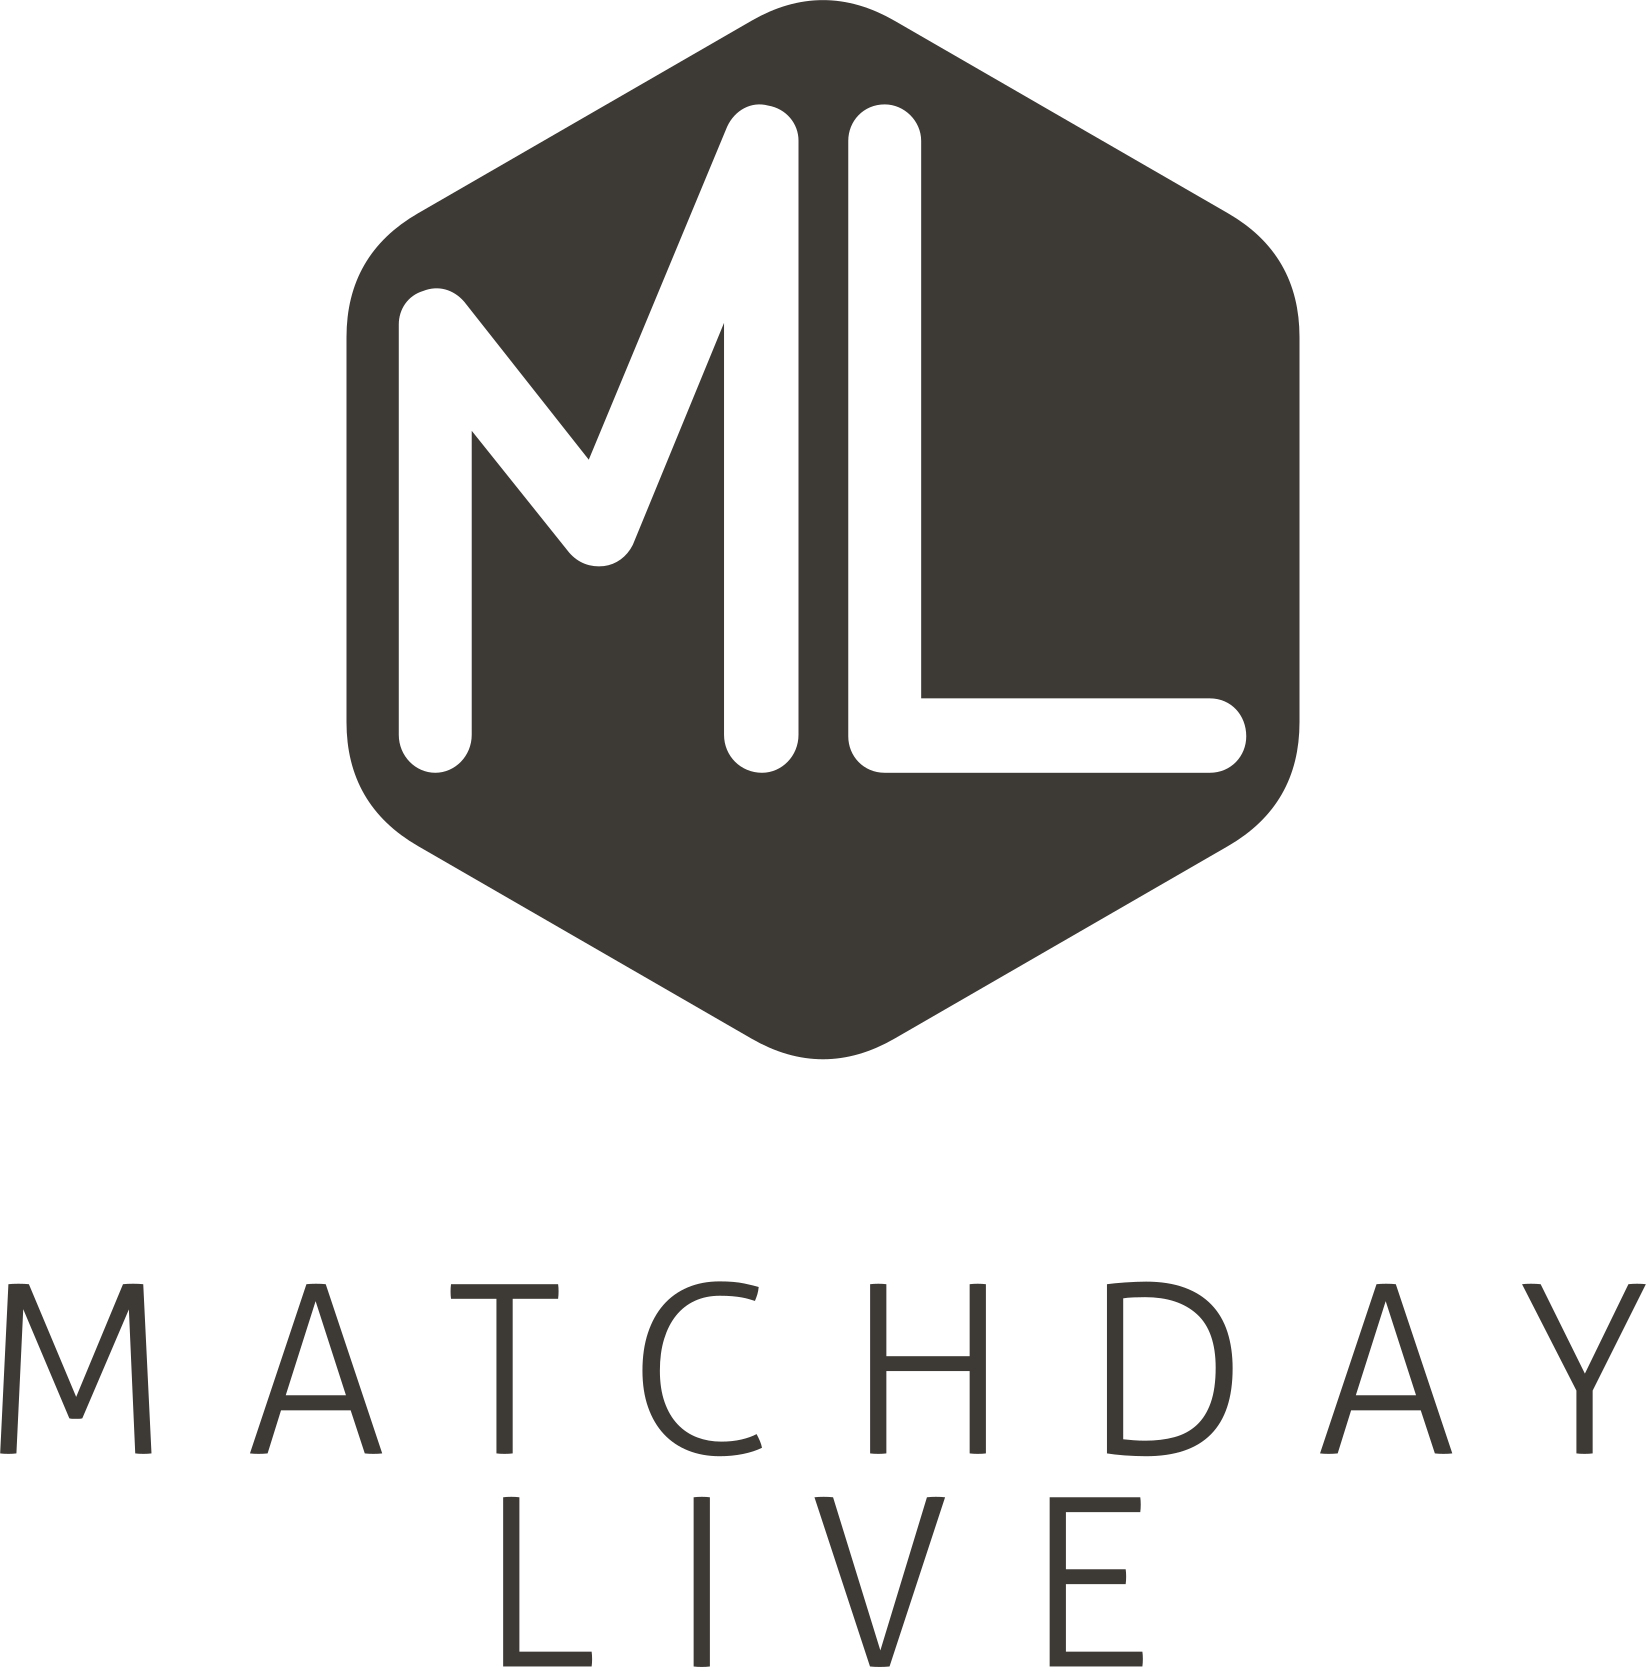 Matchday Live logo